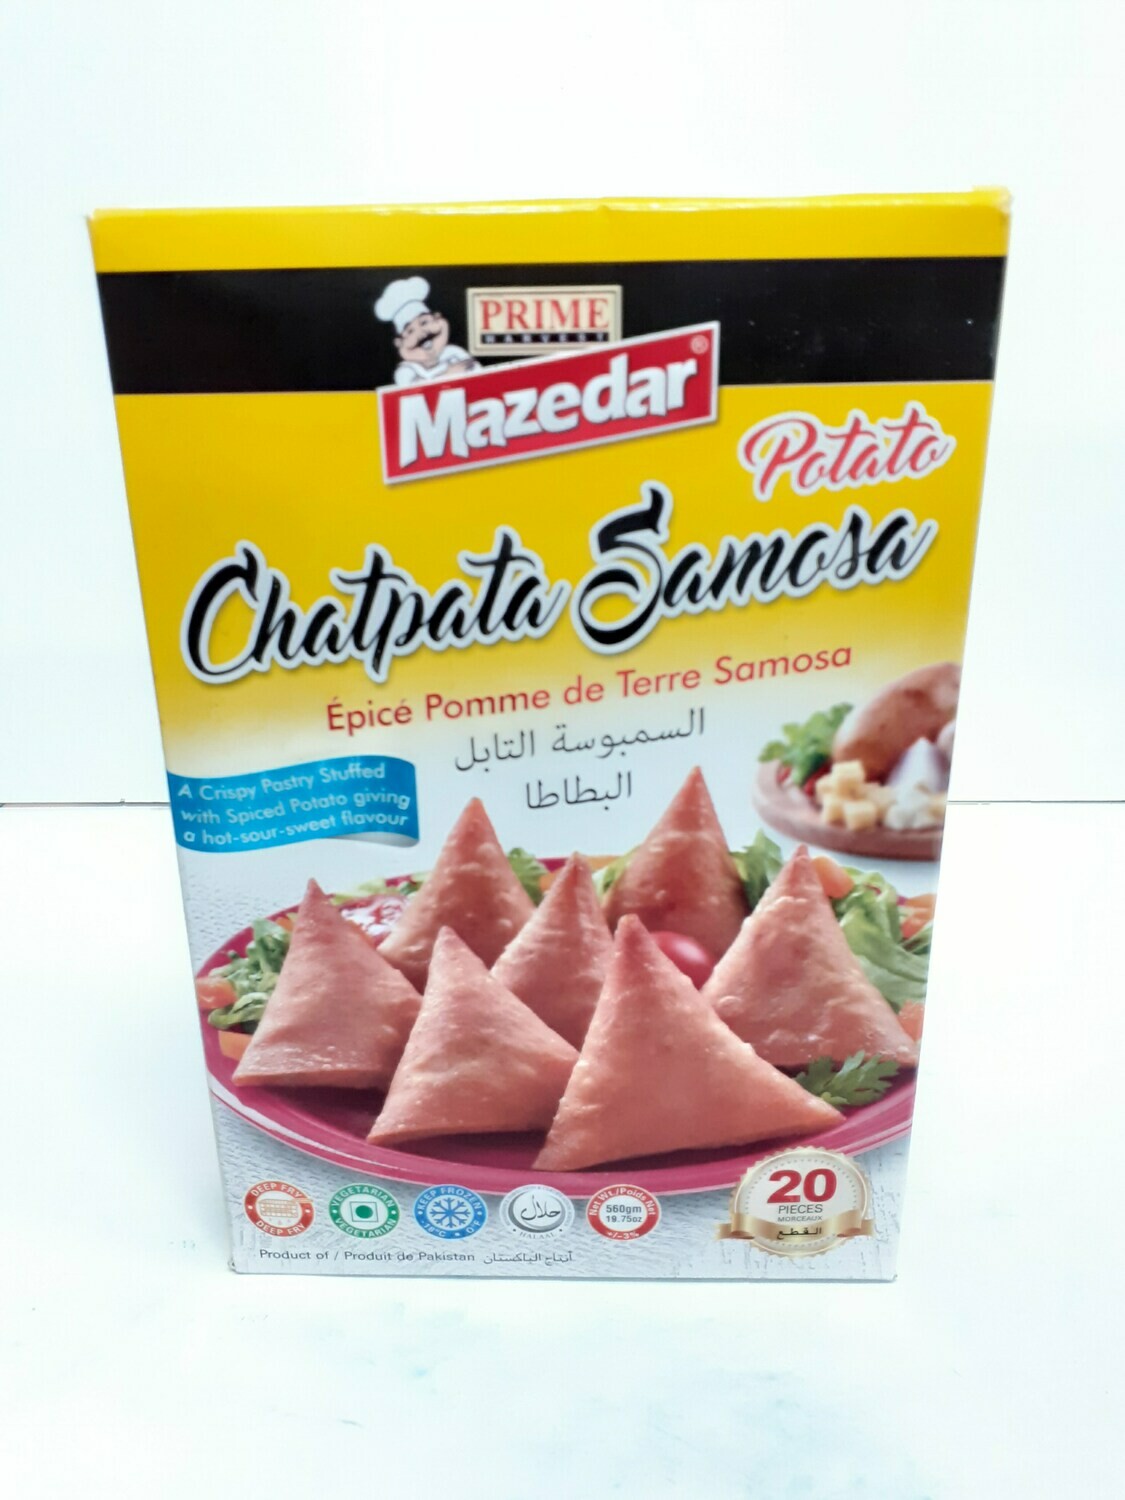 Chatpata Samosa MAZEDAR PRIME 28 g